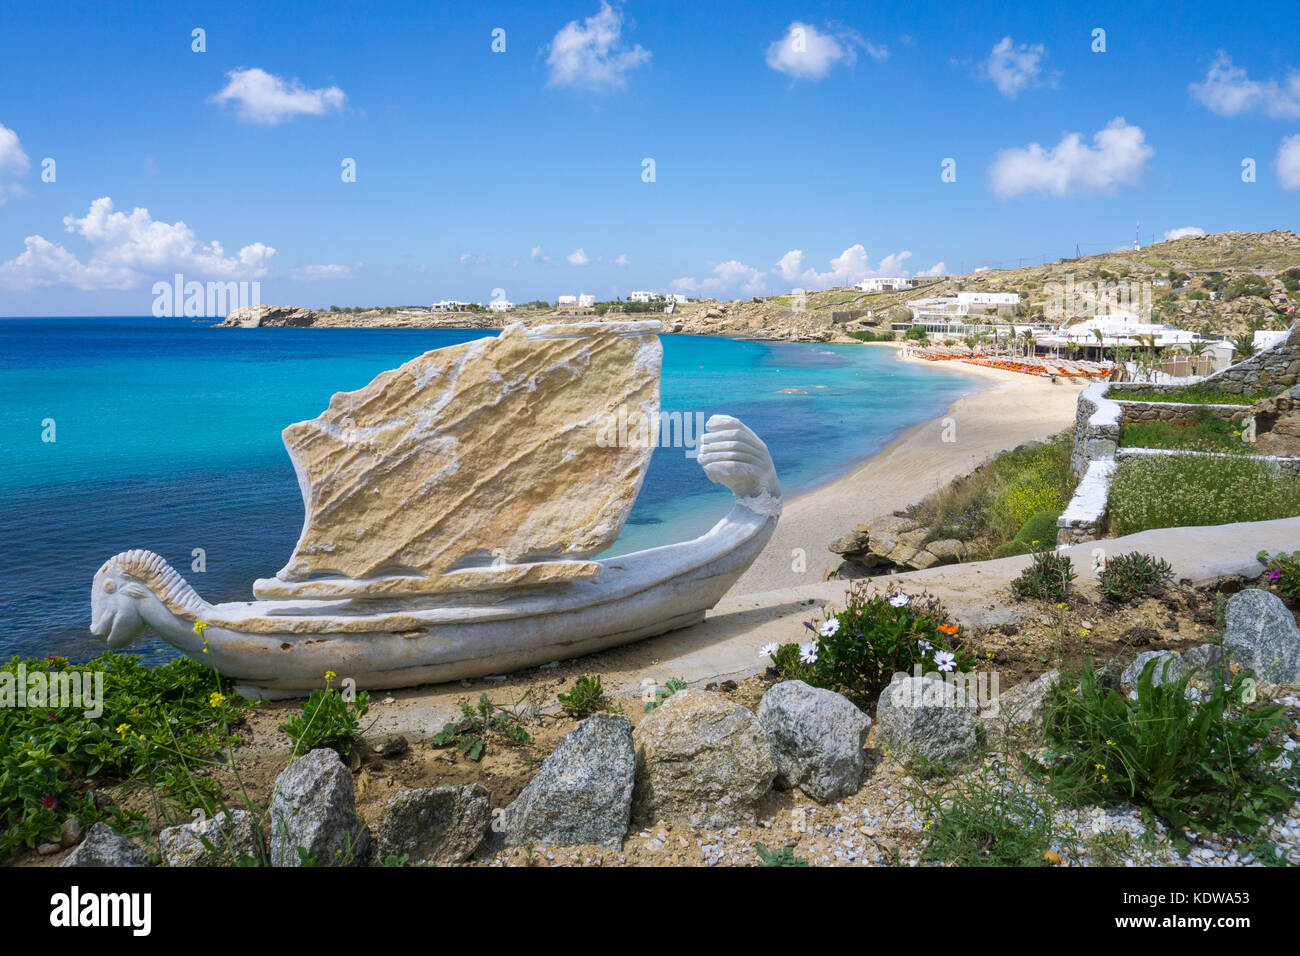 Replika of a ancient ship, Paradise beach, Mykonos Stock Photo